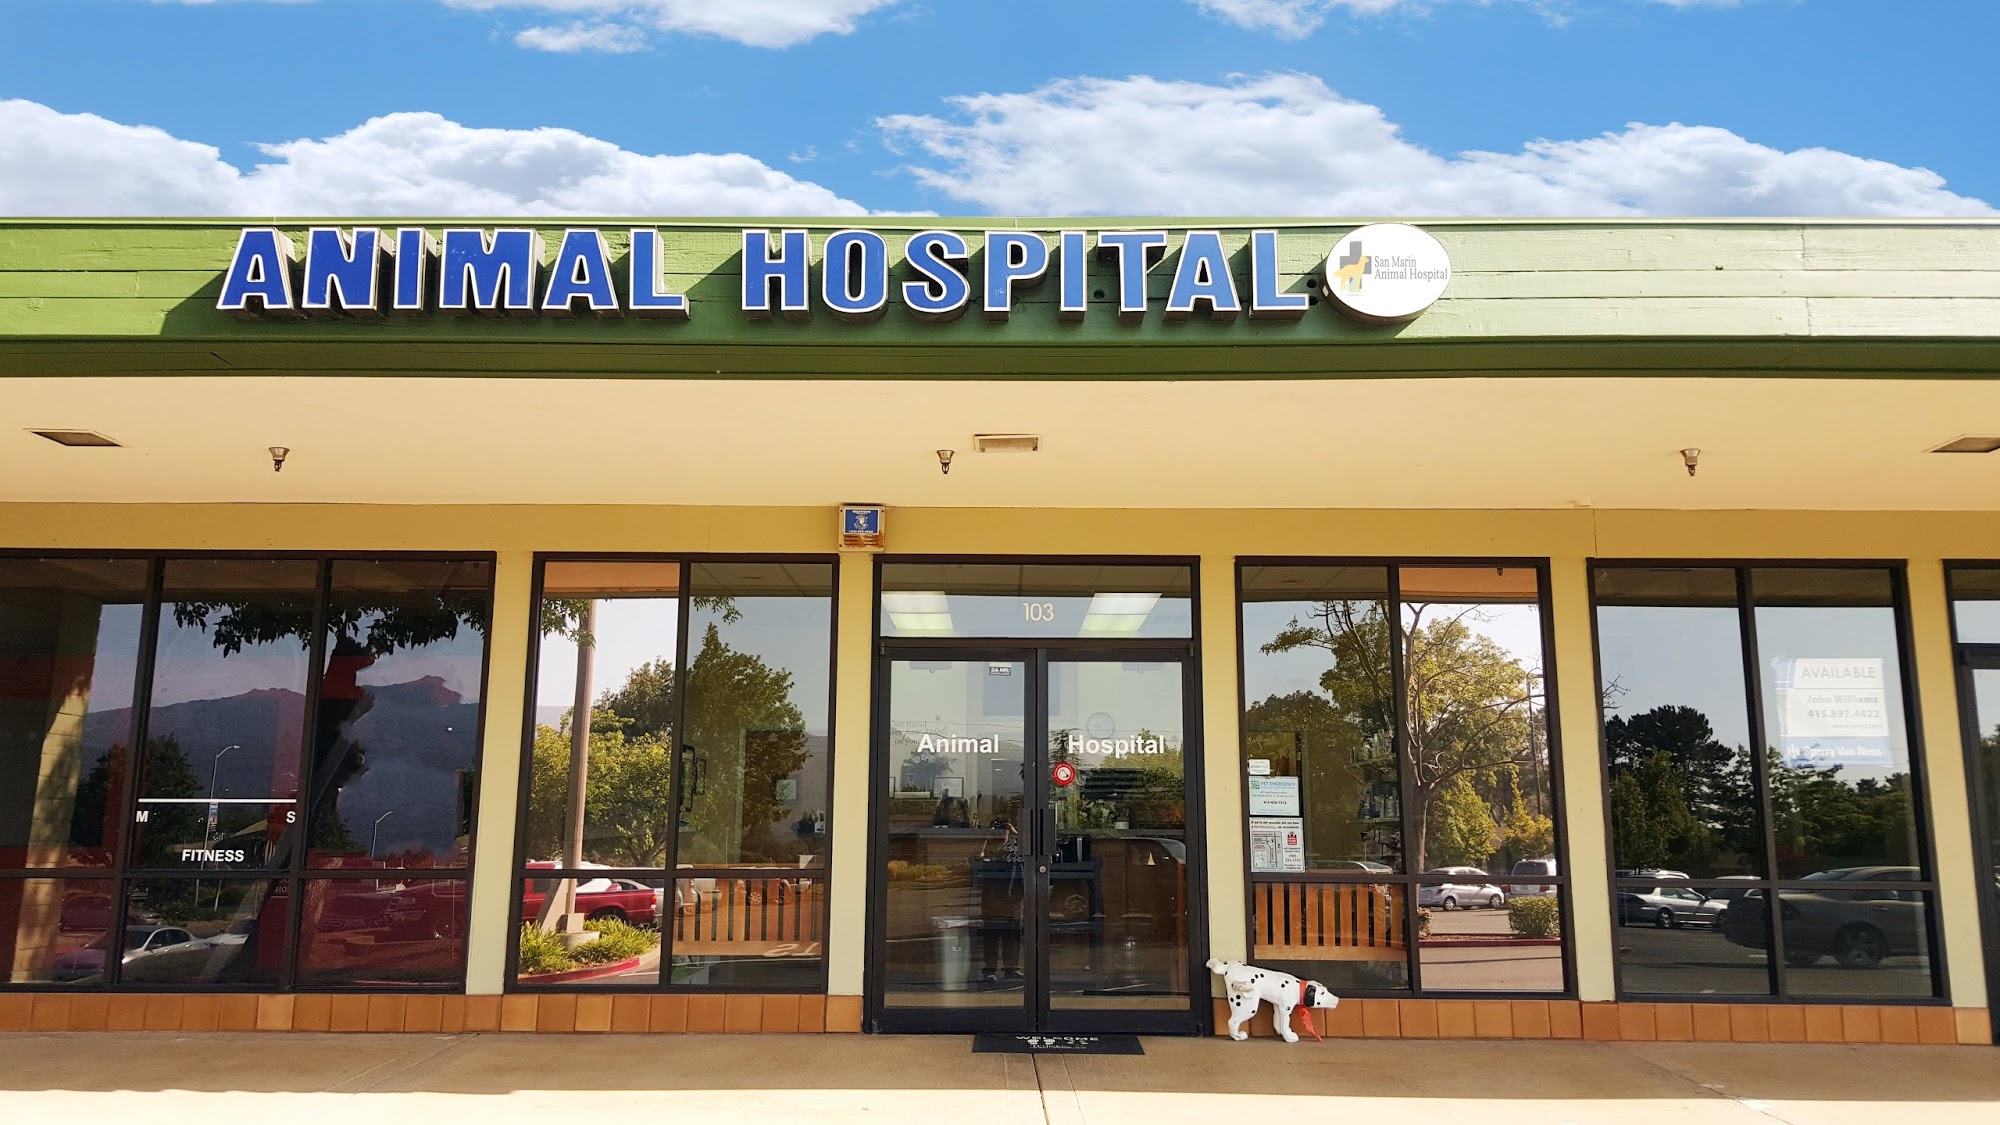 San Marin Animal Hospital